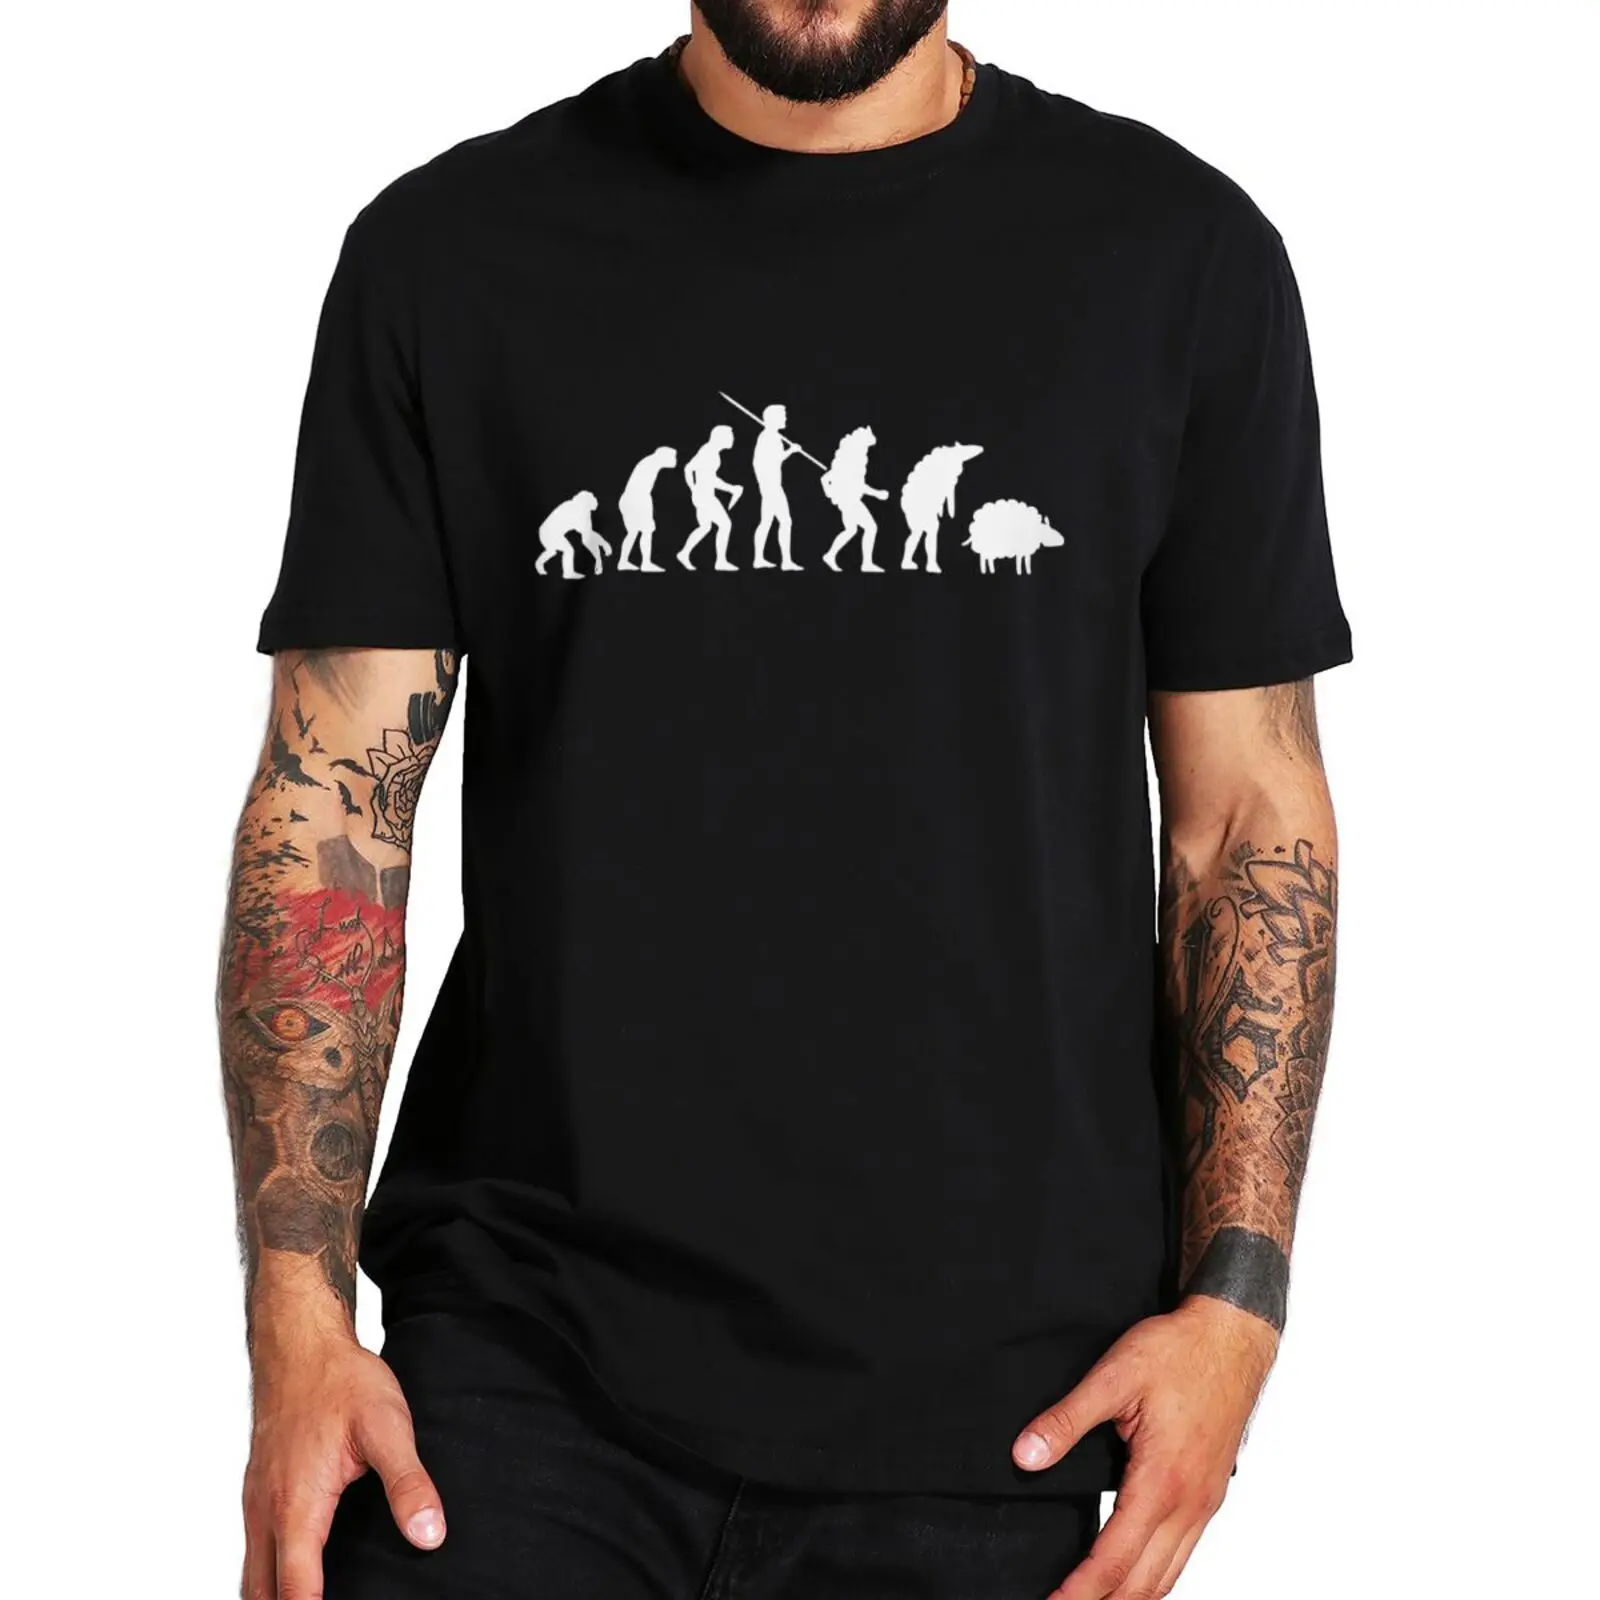 Evolution Of Man To Sheep T Shirt Funny Wake Up Sheep Conspiracy Puns Jokes Men Clothing Summer Cotton T-shirt